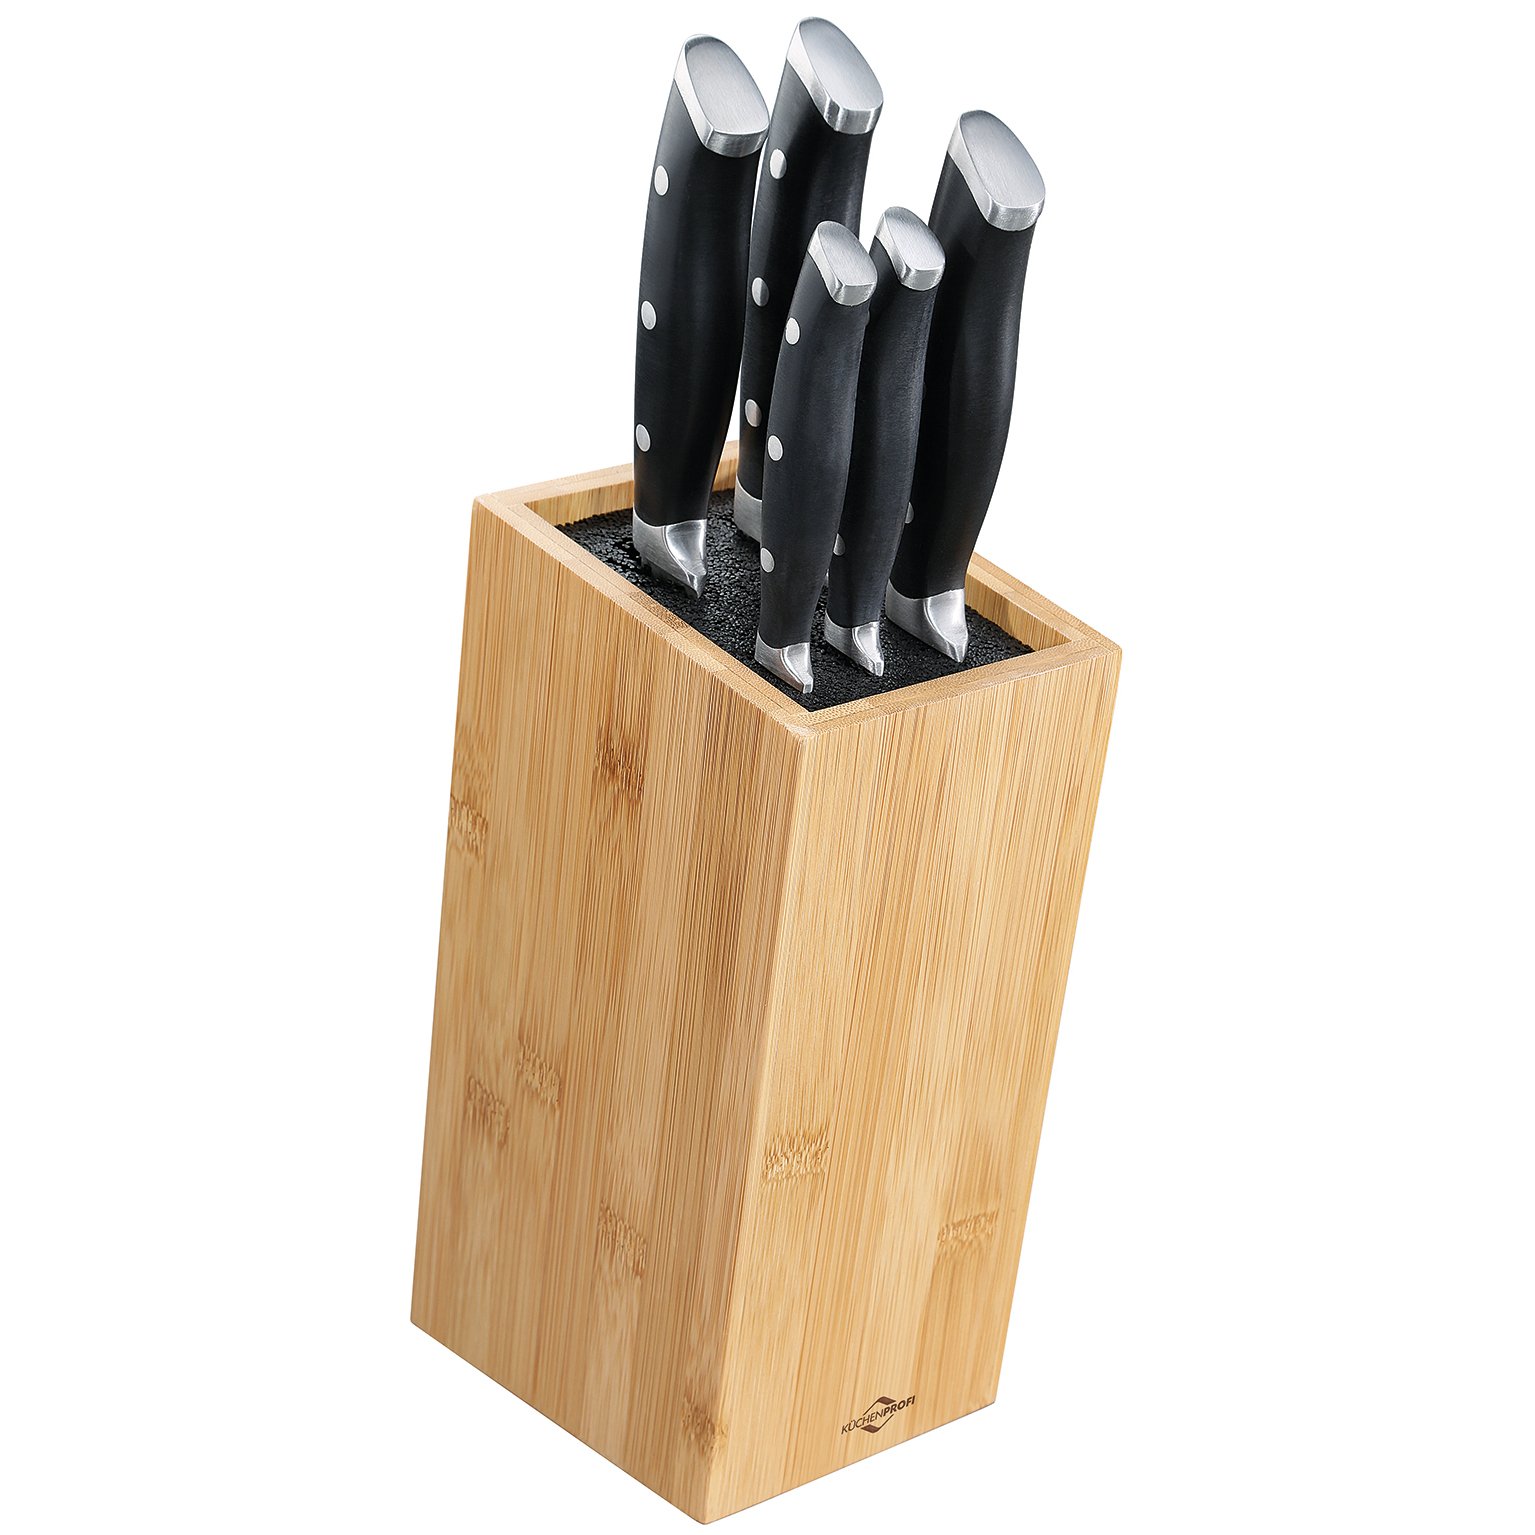 KUCHENPROFI Primus 5 ks černá - sada ocelových kuchyňských nožů v bloku